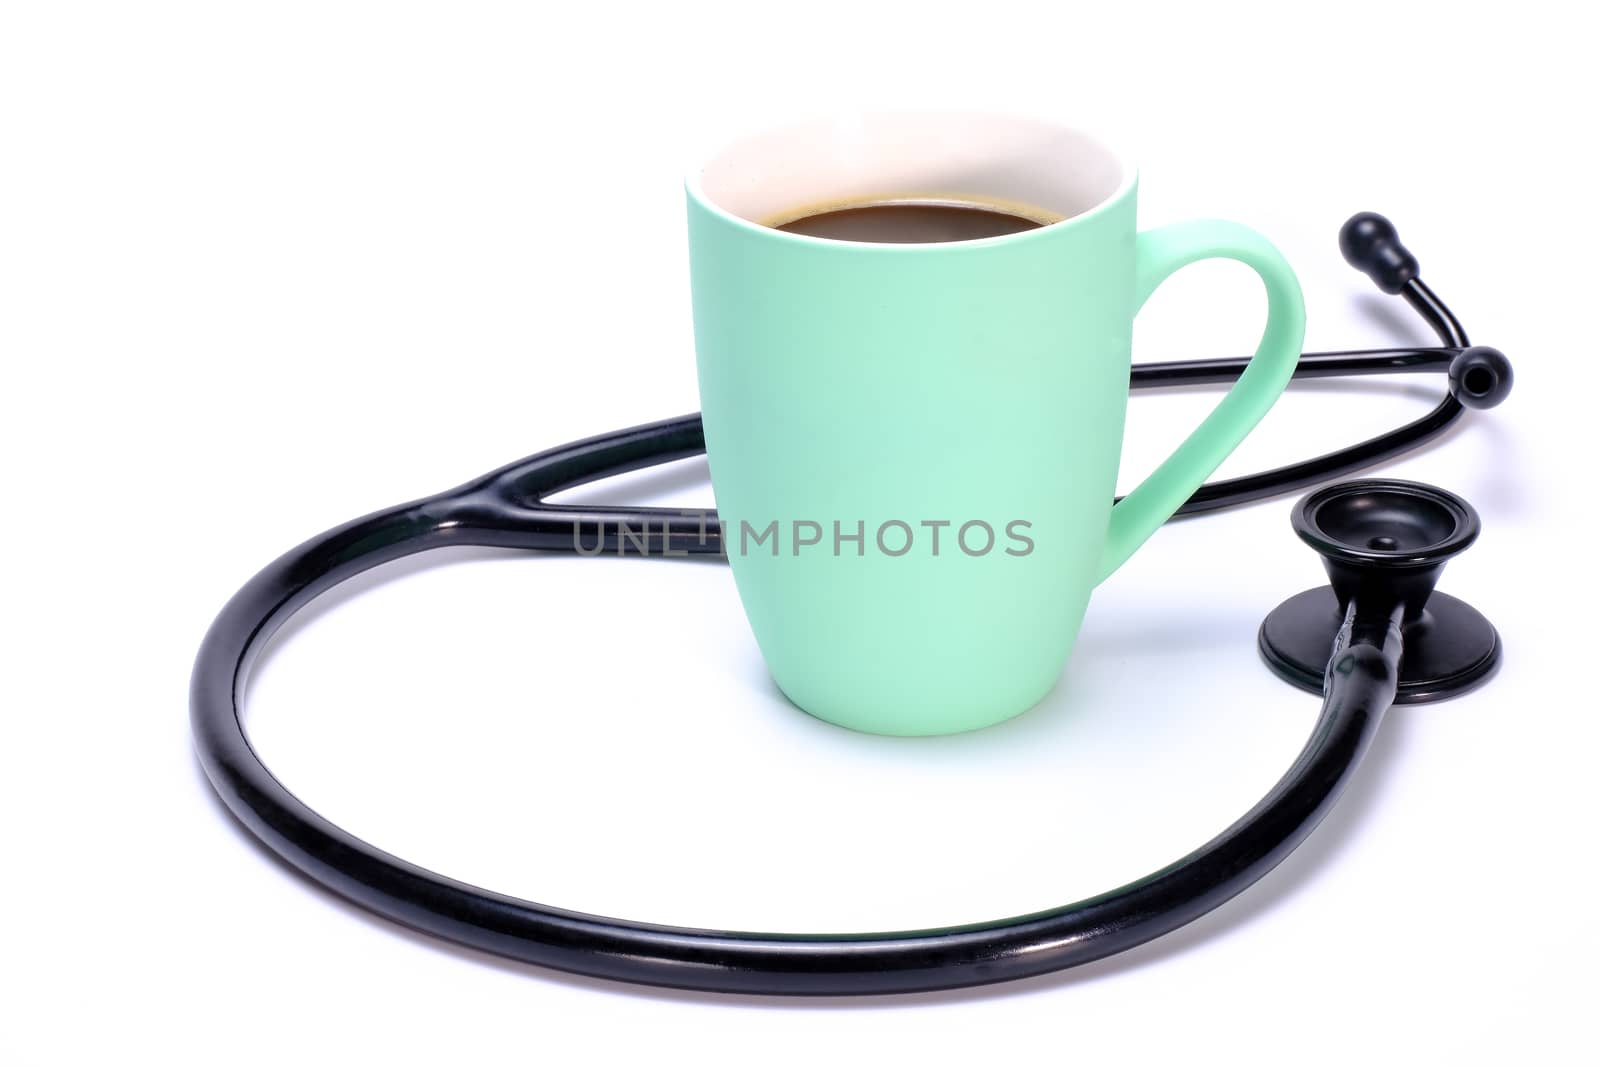 stethoscope and coffee mug by Nawoot